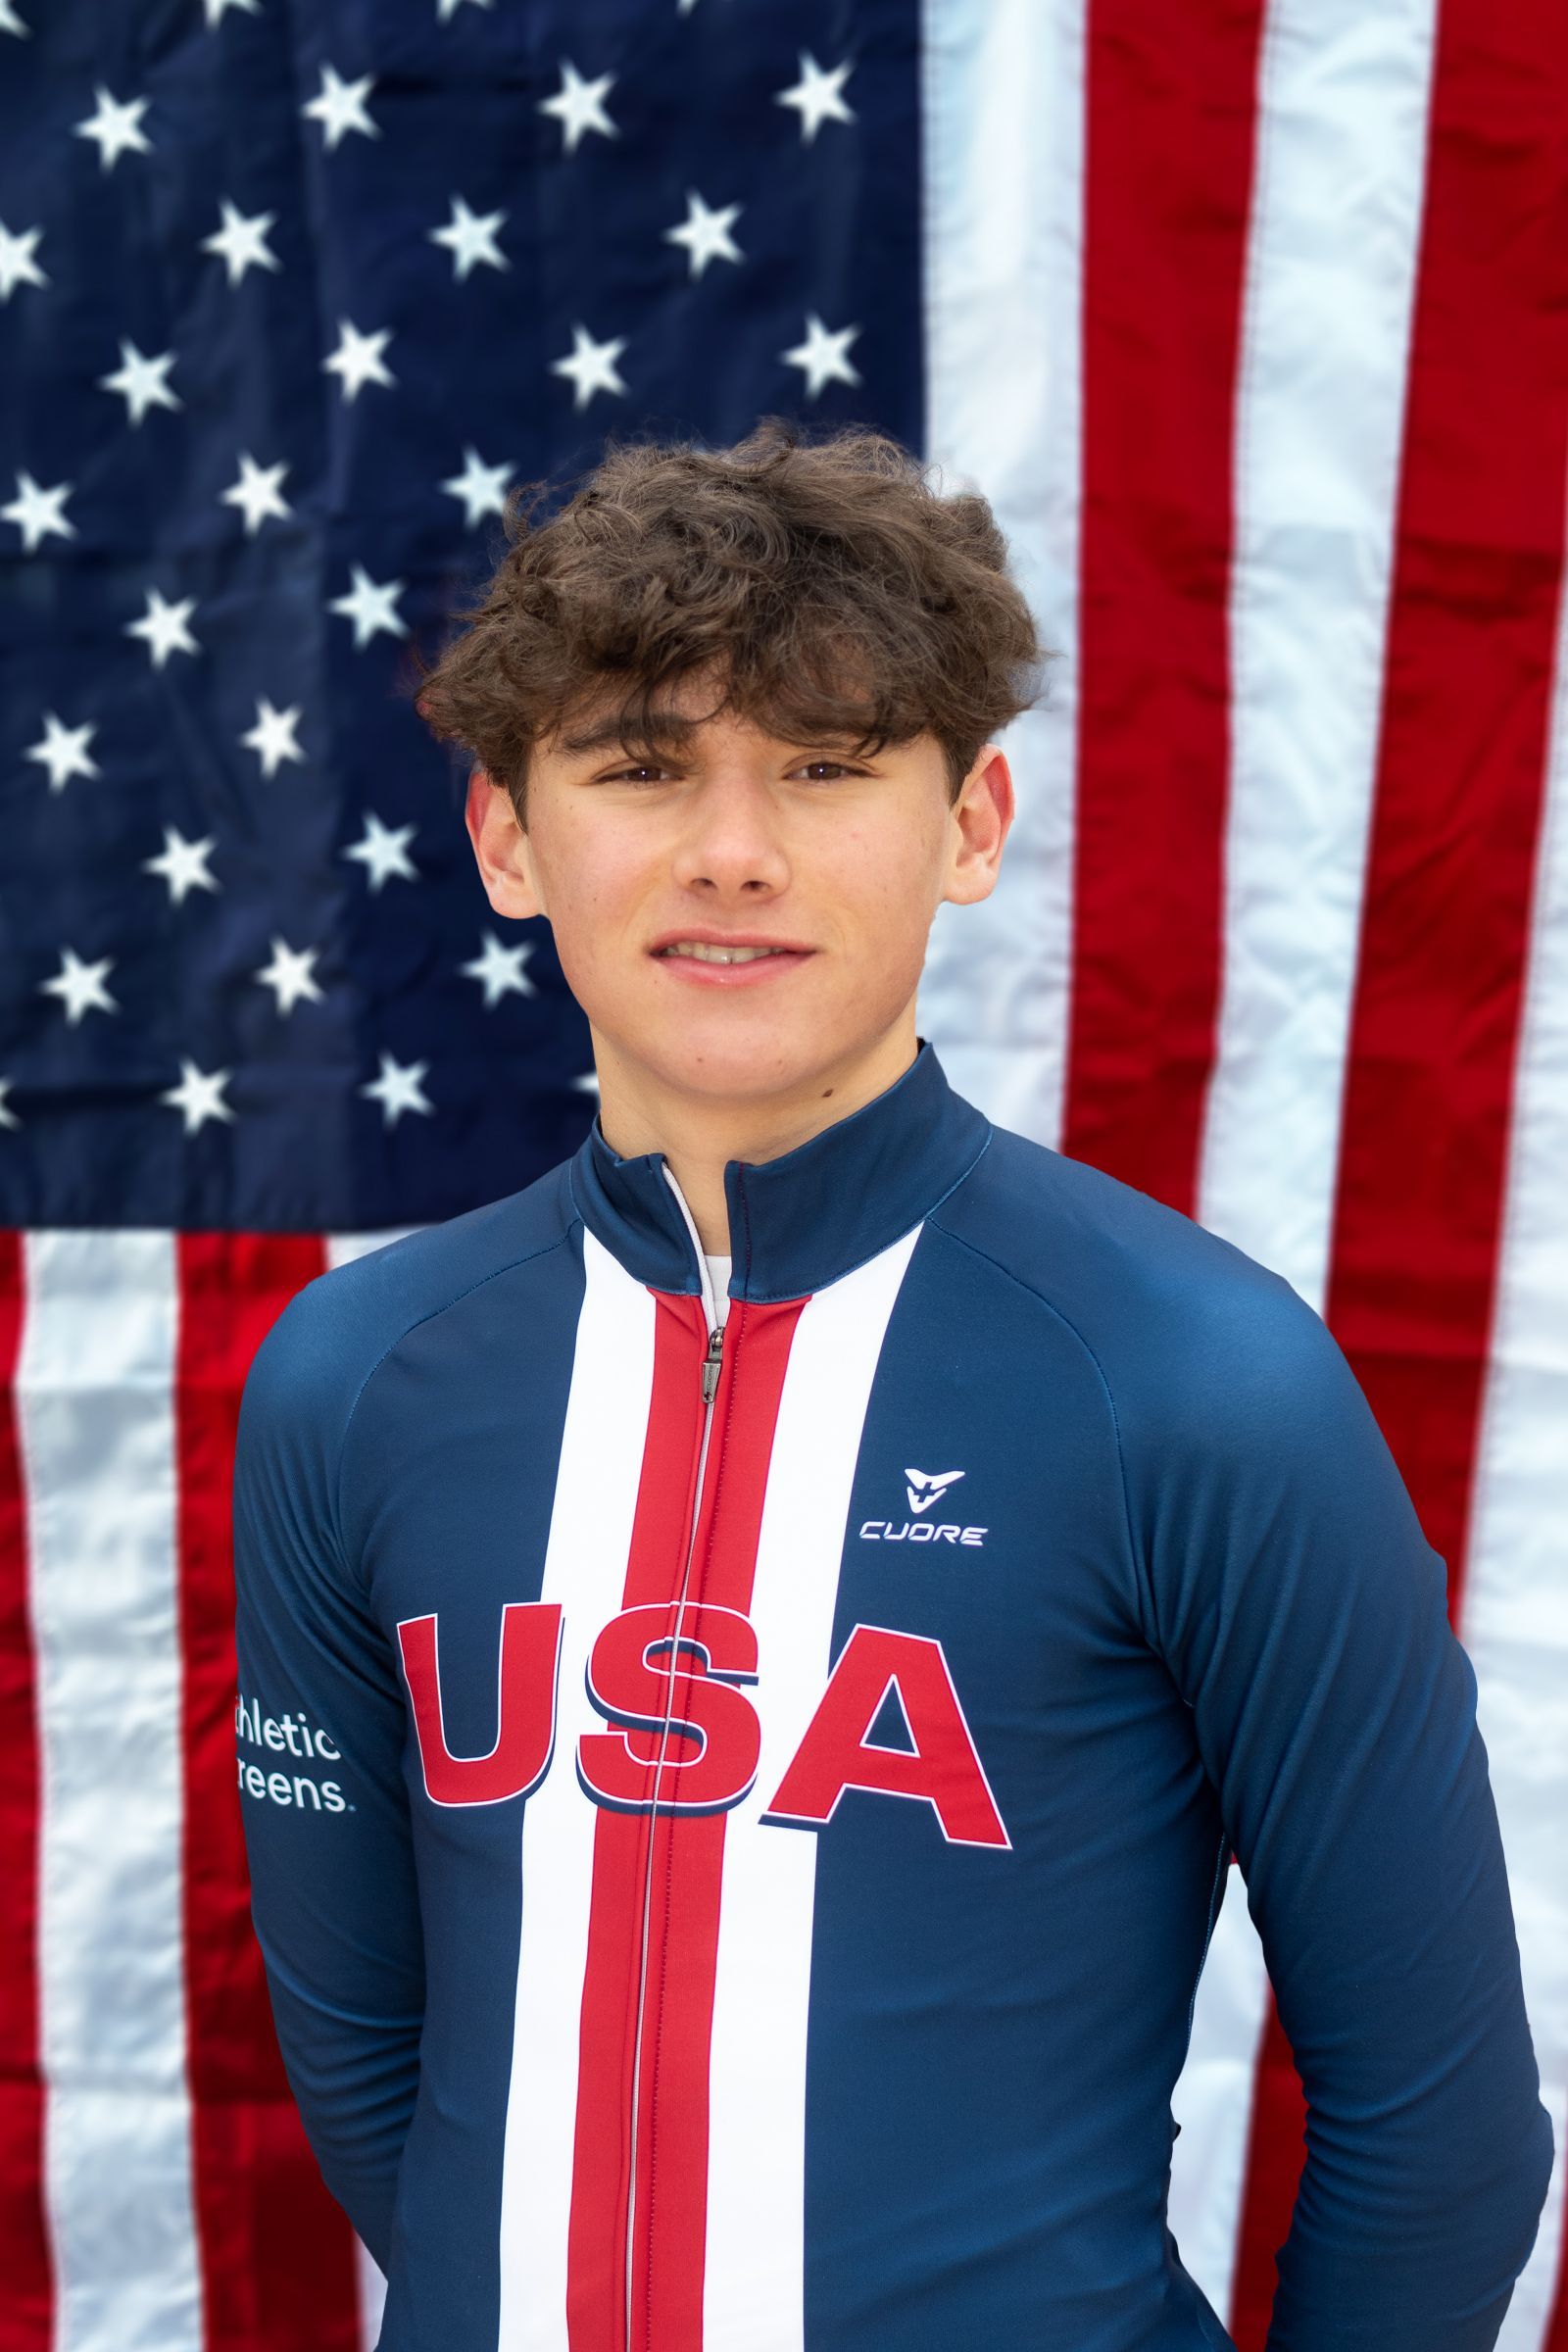 Magnus White USA Cycling Team